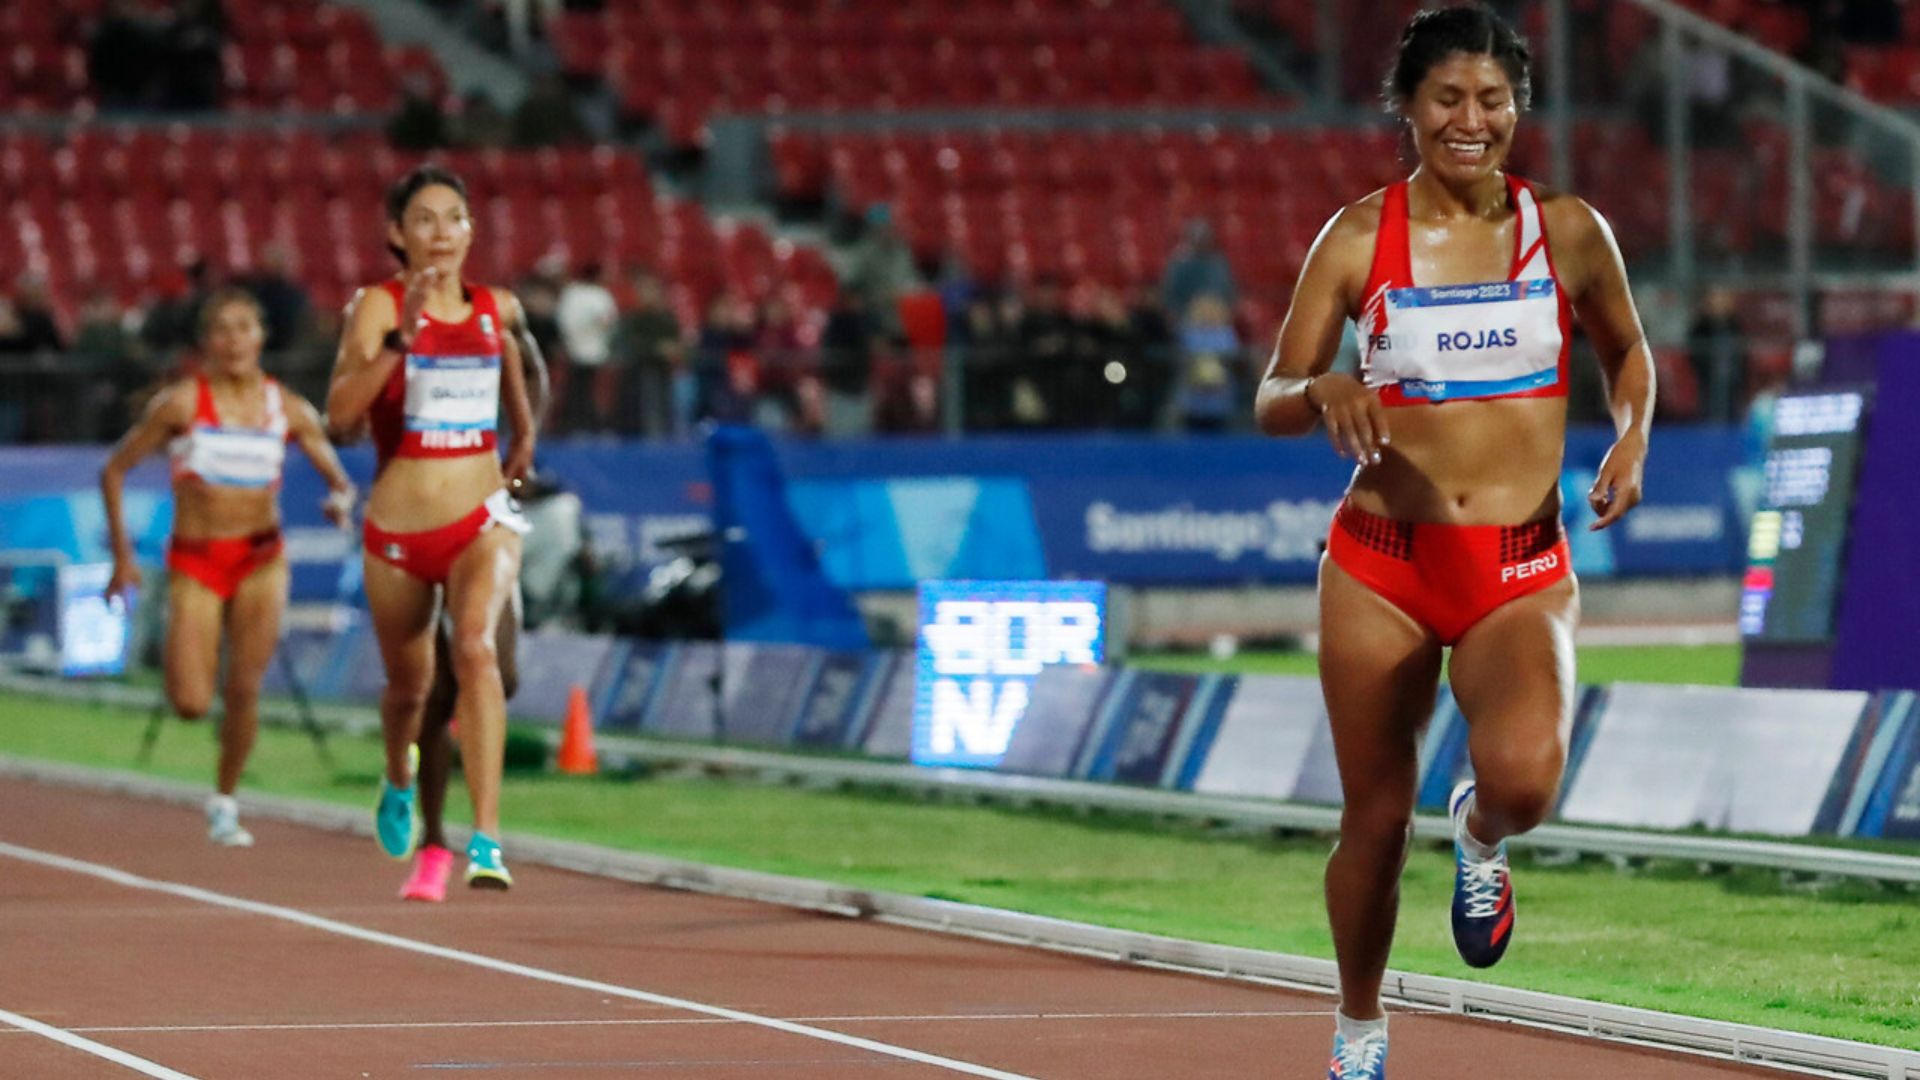 Peru takes gold in female's 10,000 meters